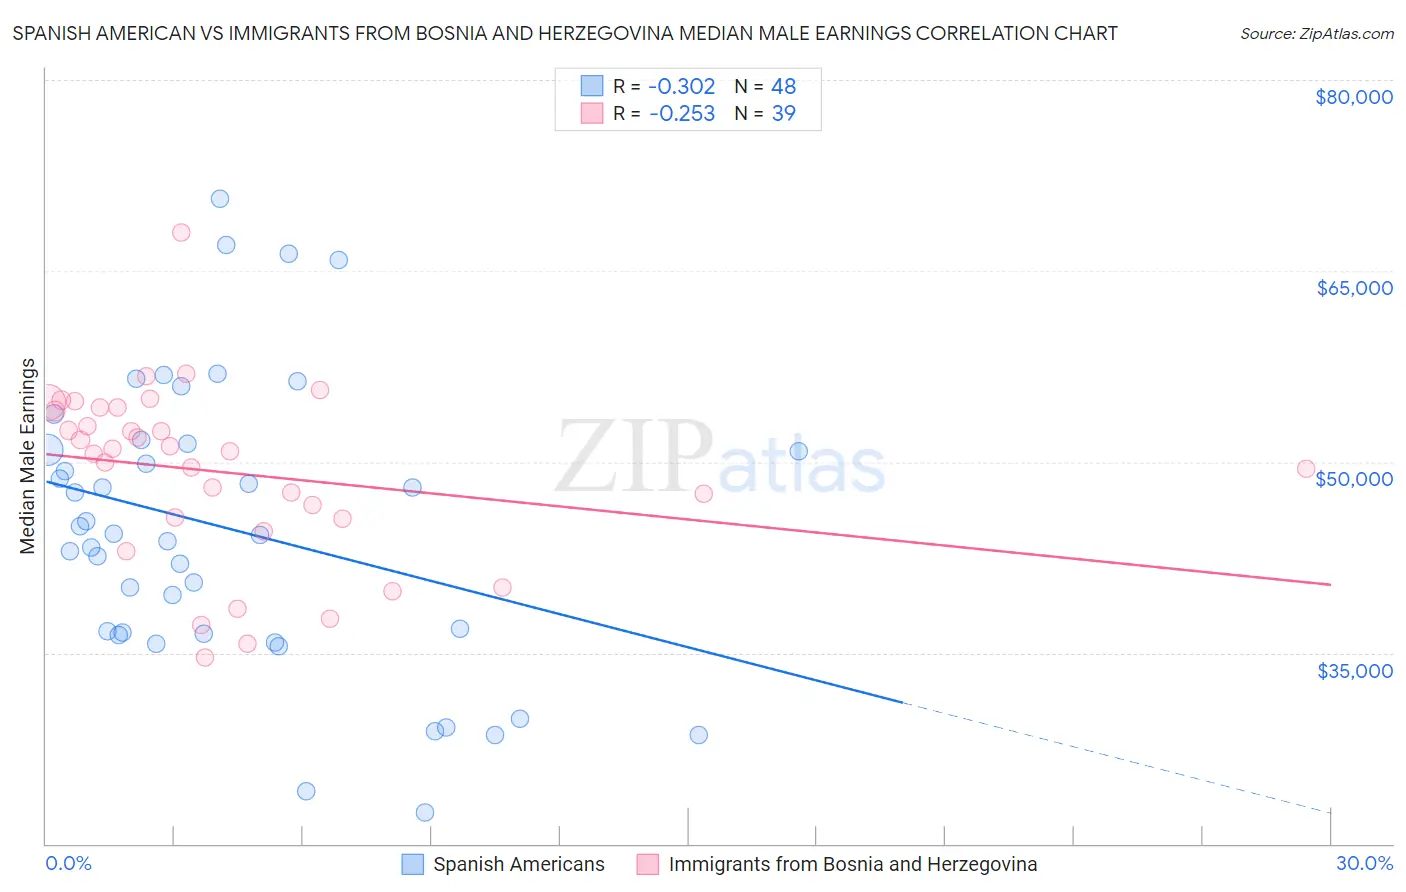 Spanish American vs Immigrants from Bosnia and Herzegovina Median Male Earnings